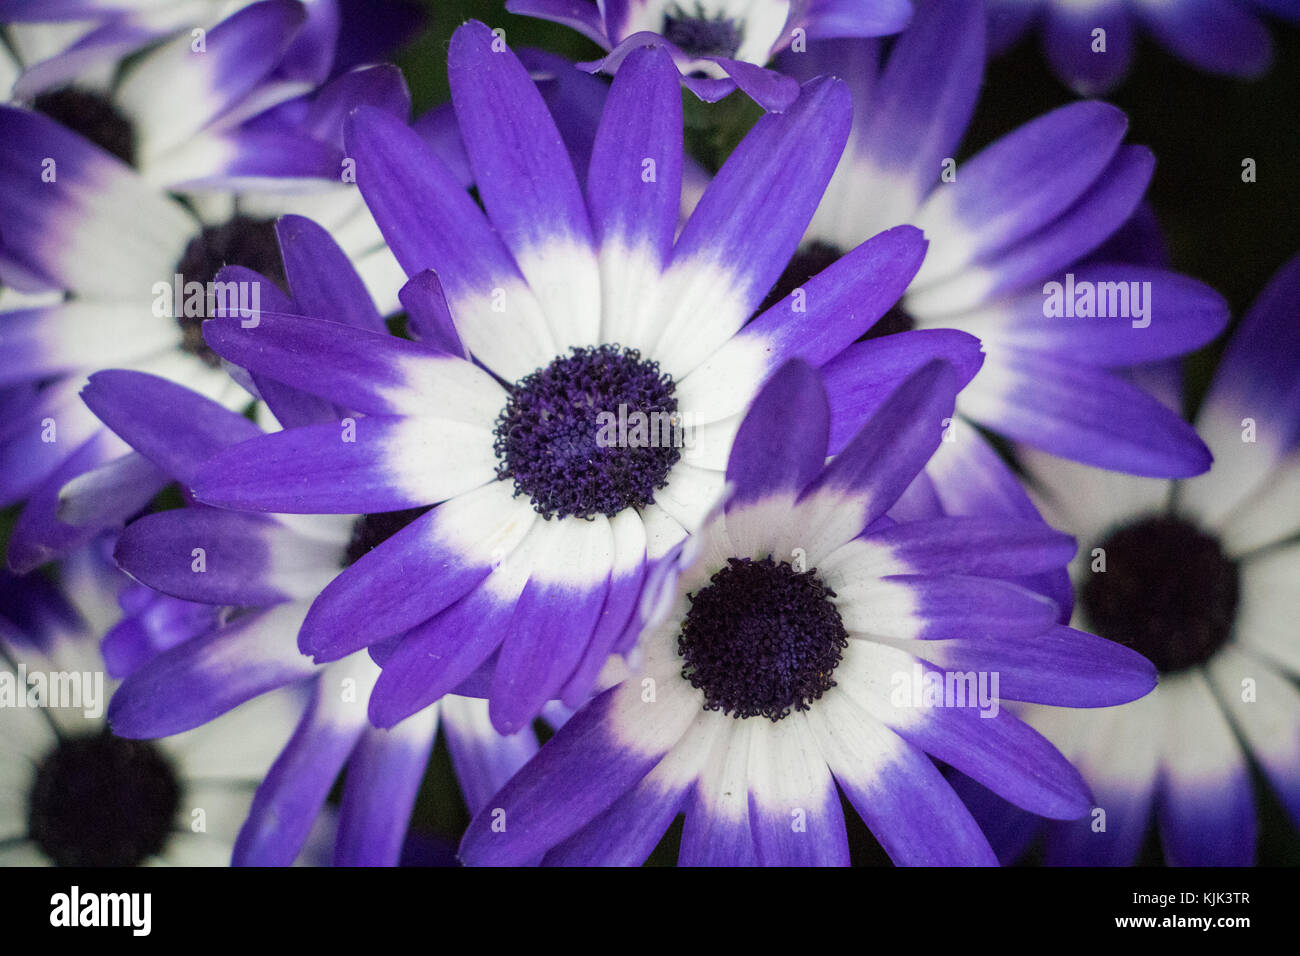 Purple flowers with dark centre. Stock Photo